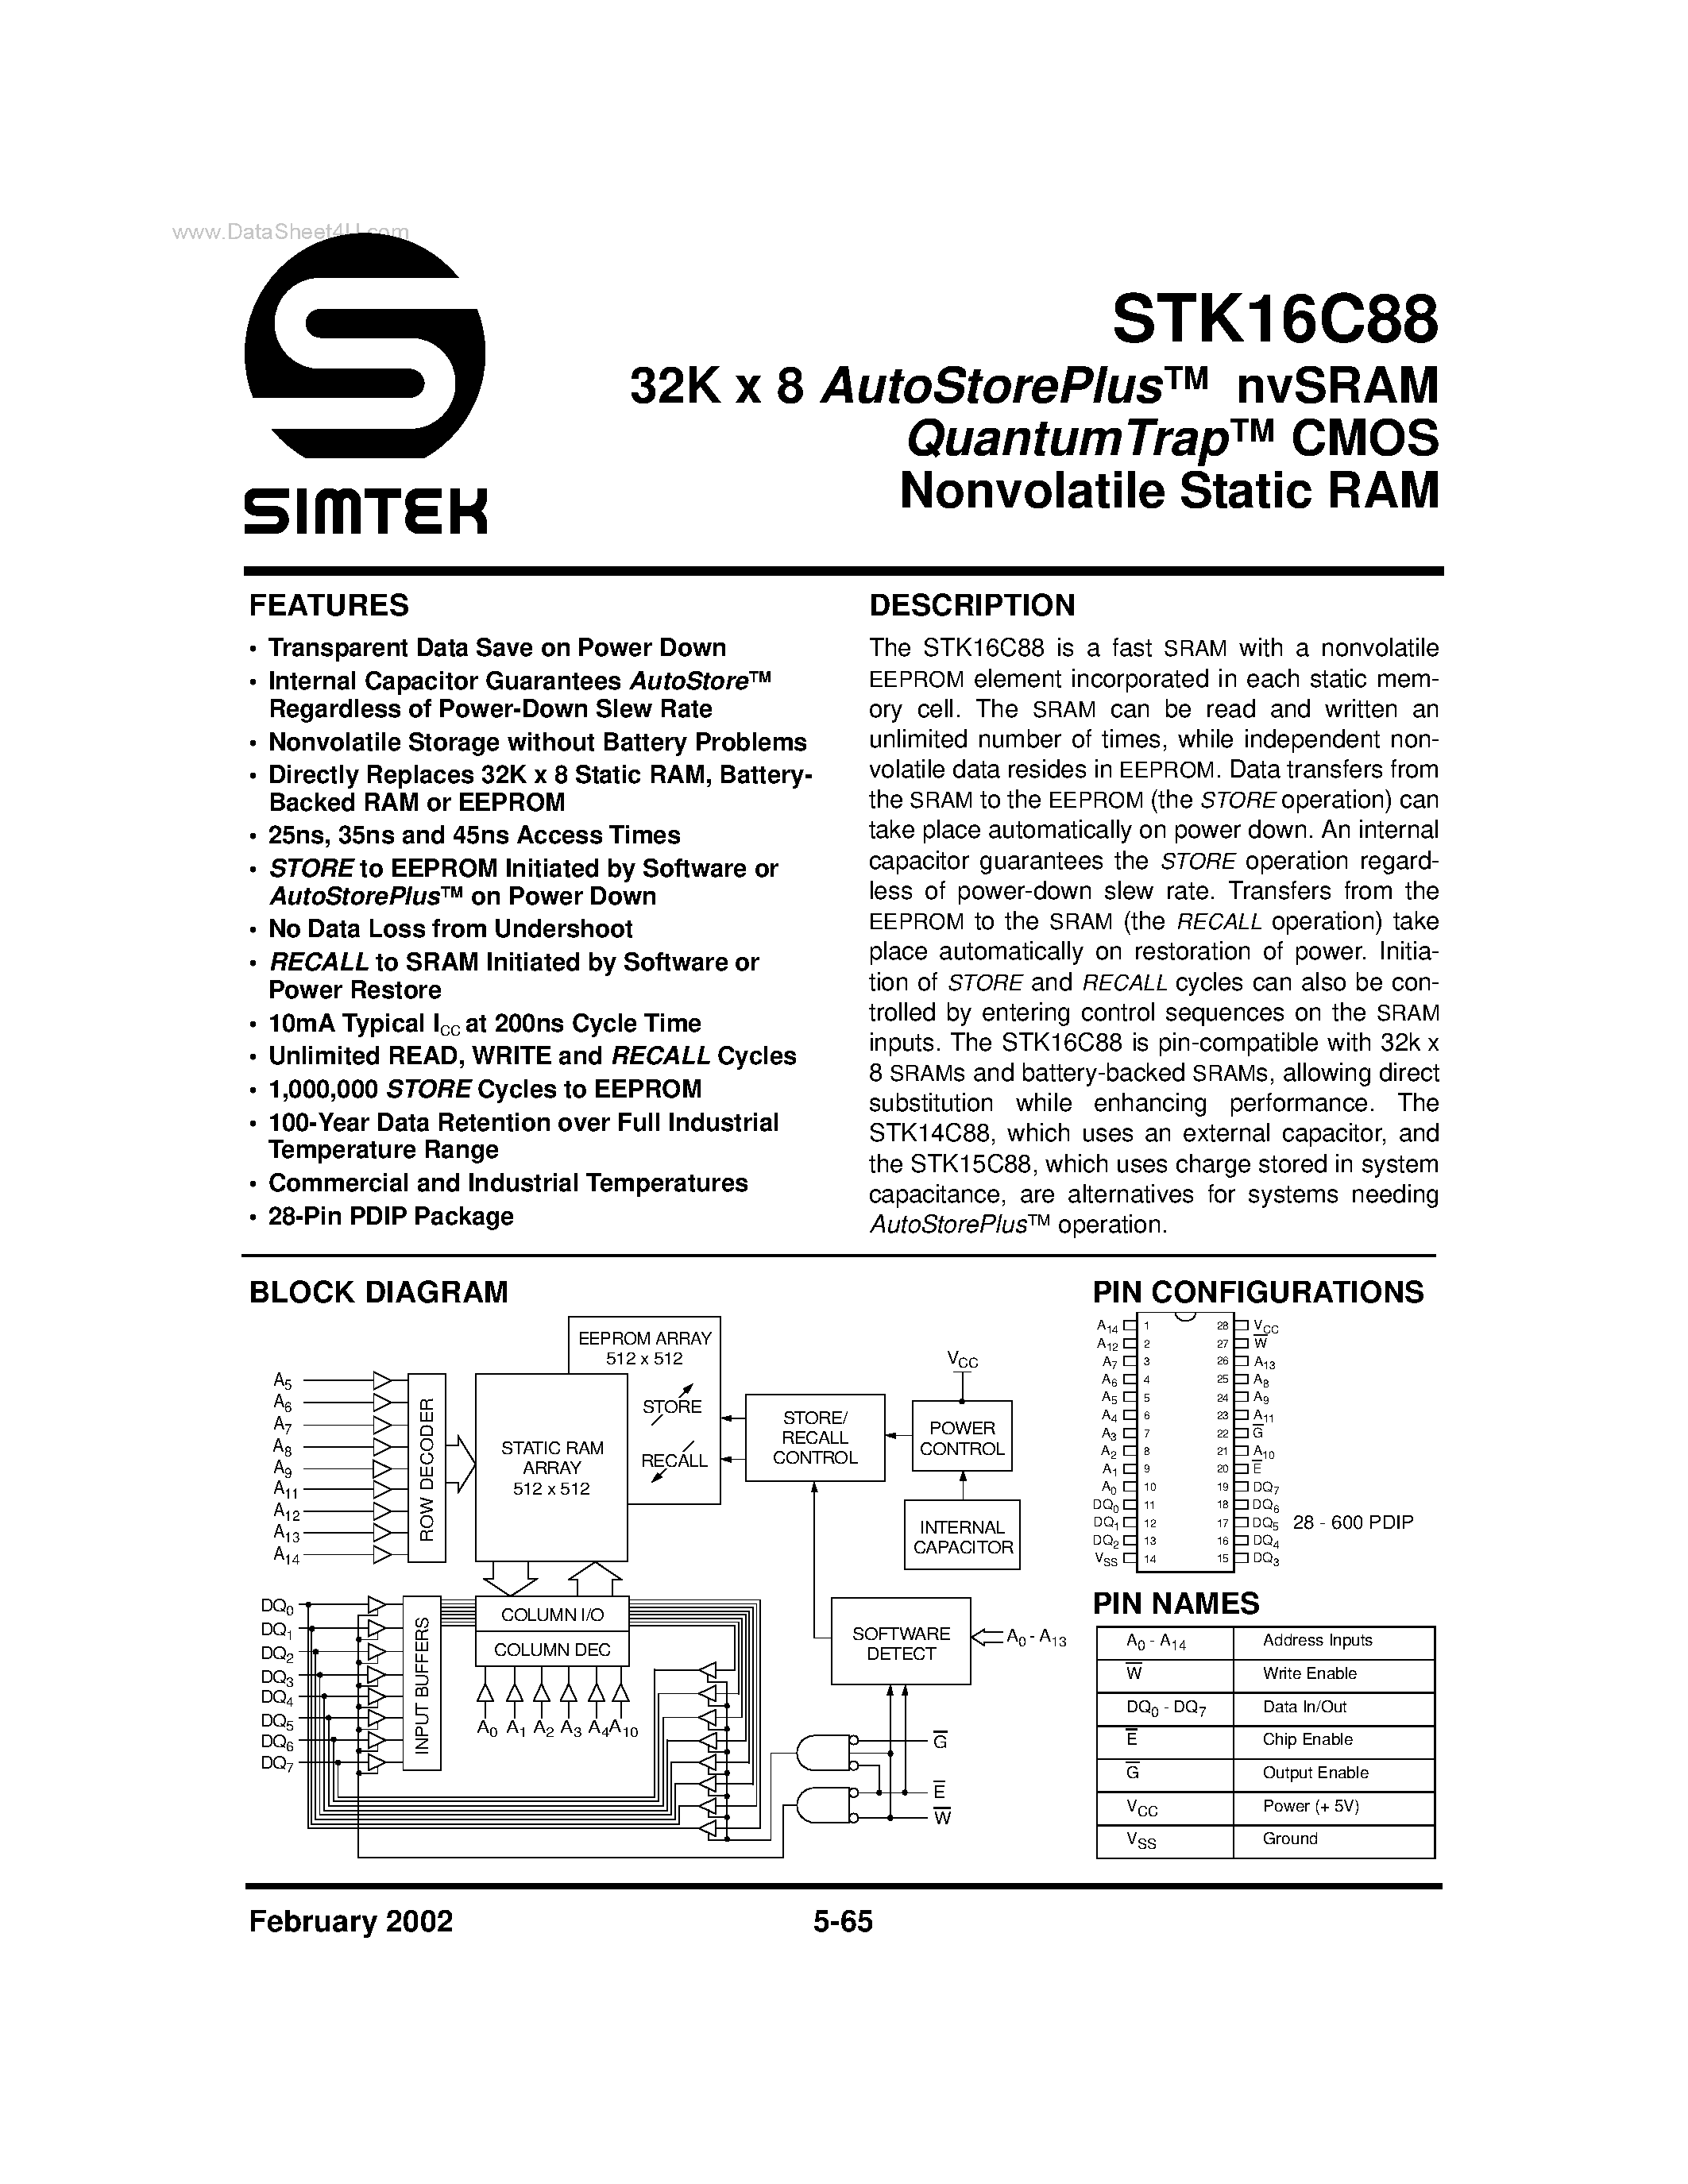 Даташит STK16C88 - CMOS Nonvolatile Static RAM страница 1